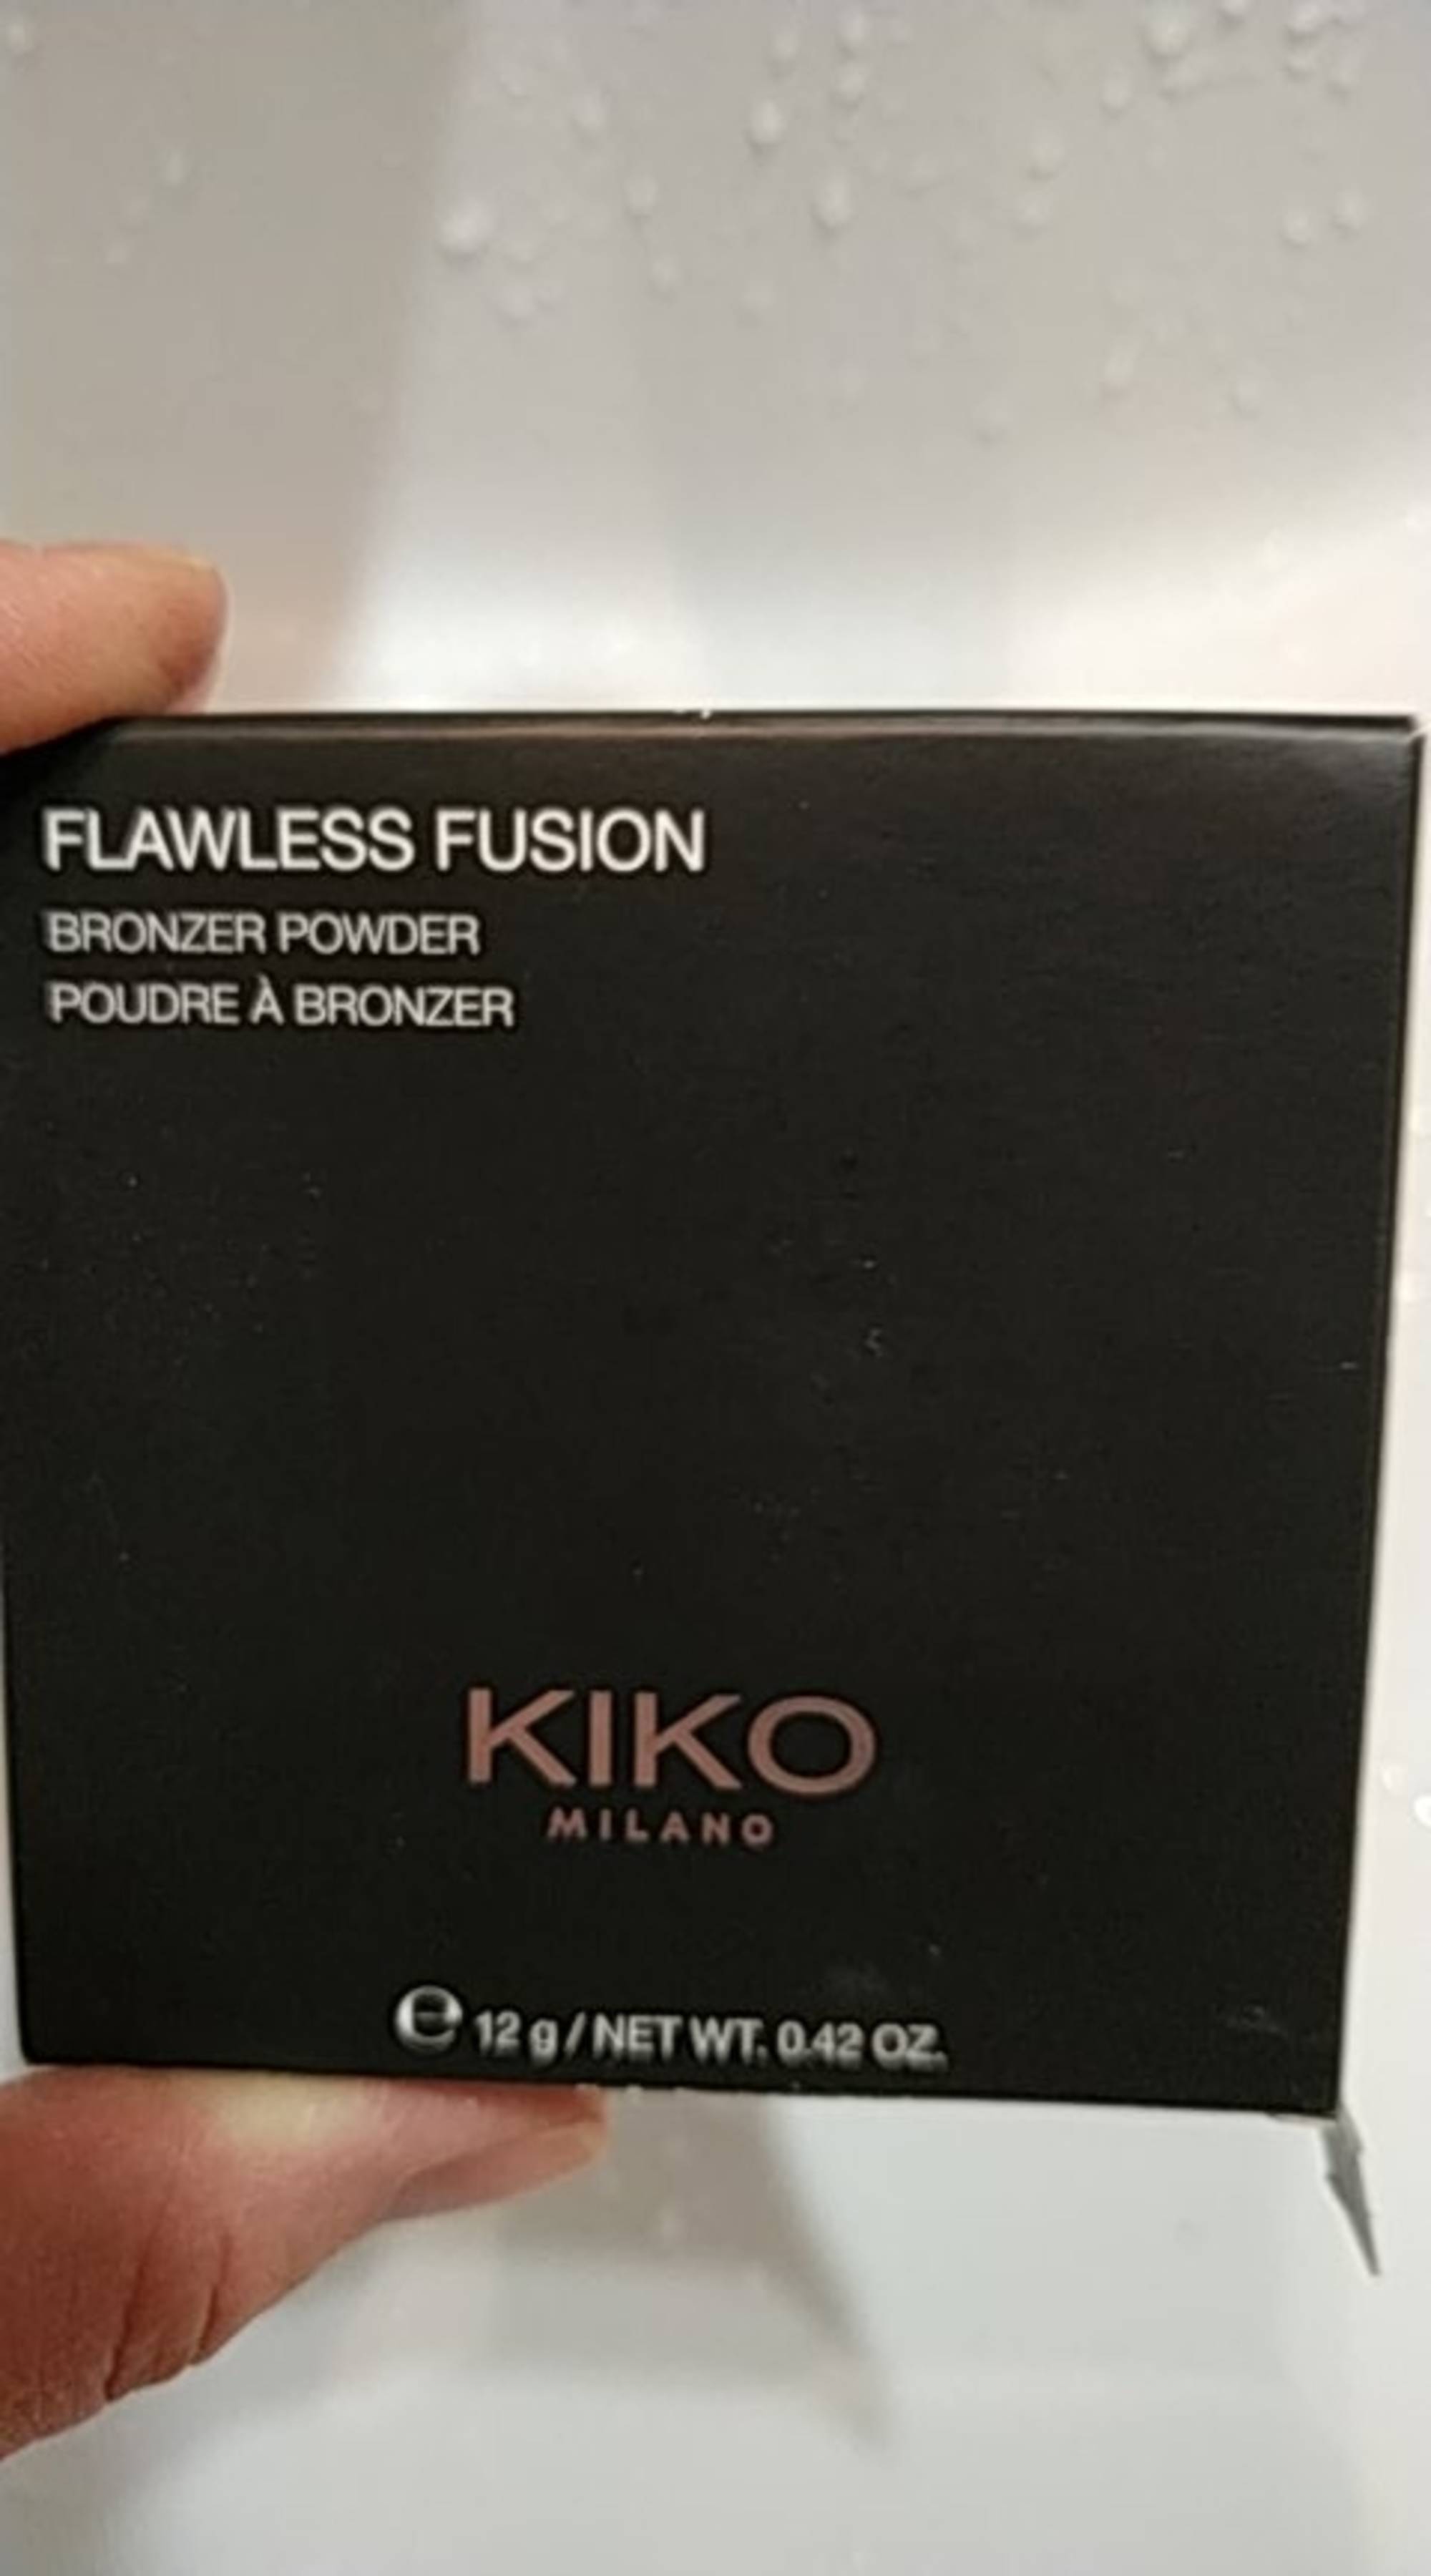 KIKO - Flawless Fusion - Bronzer powder